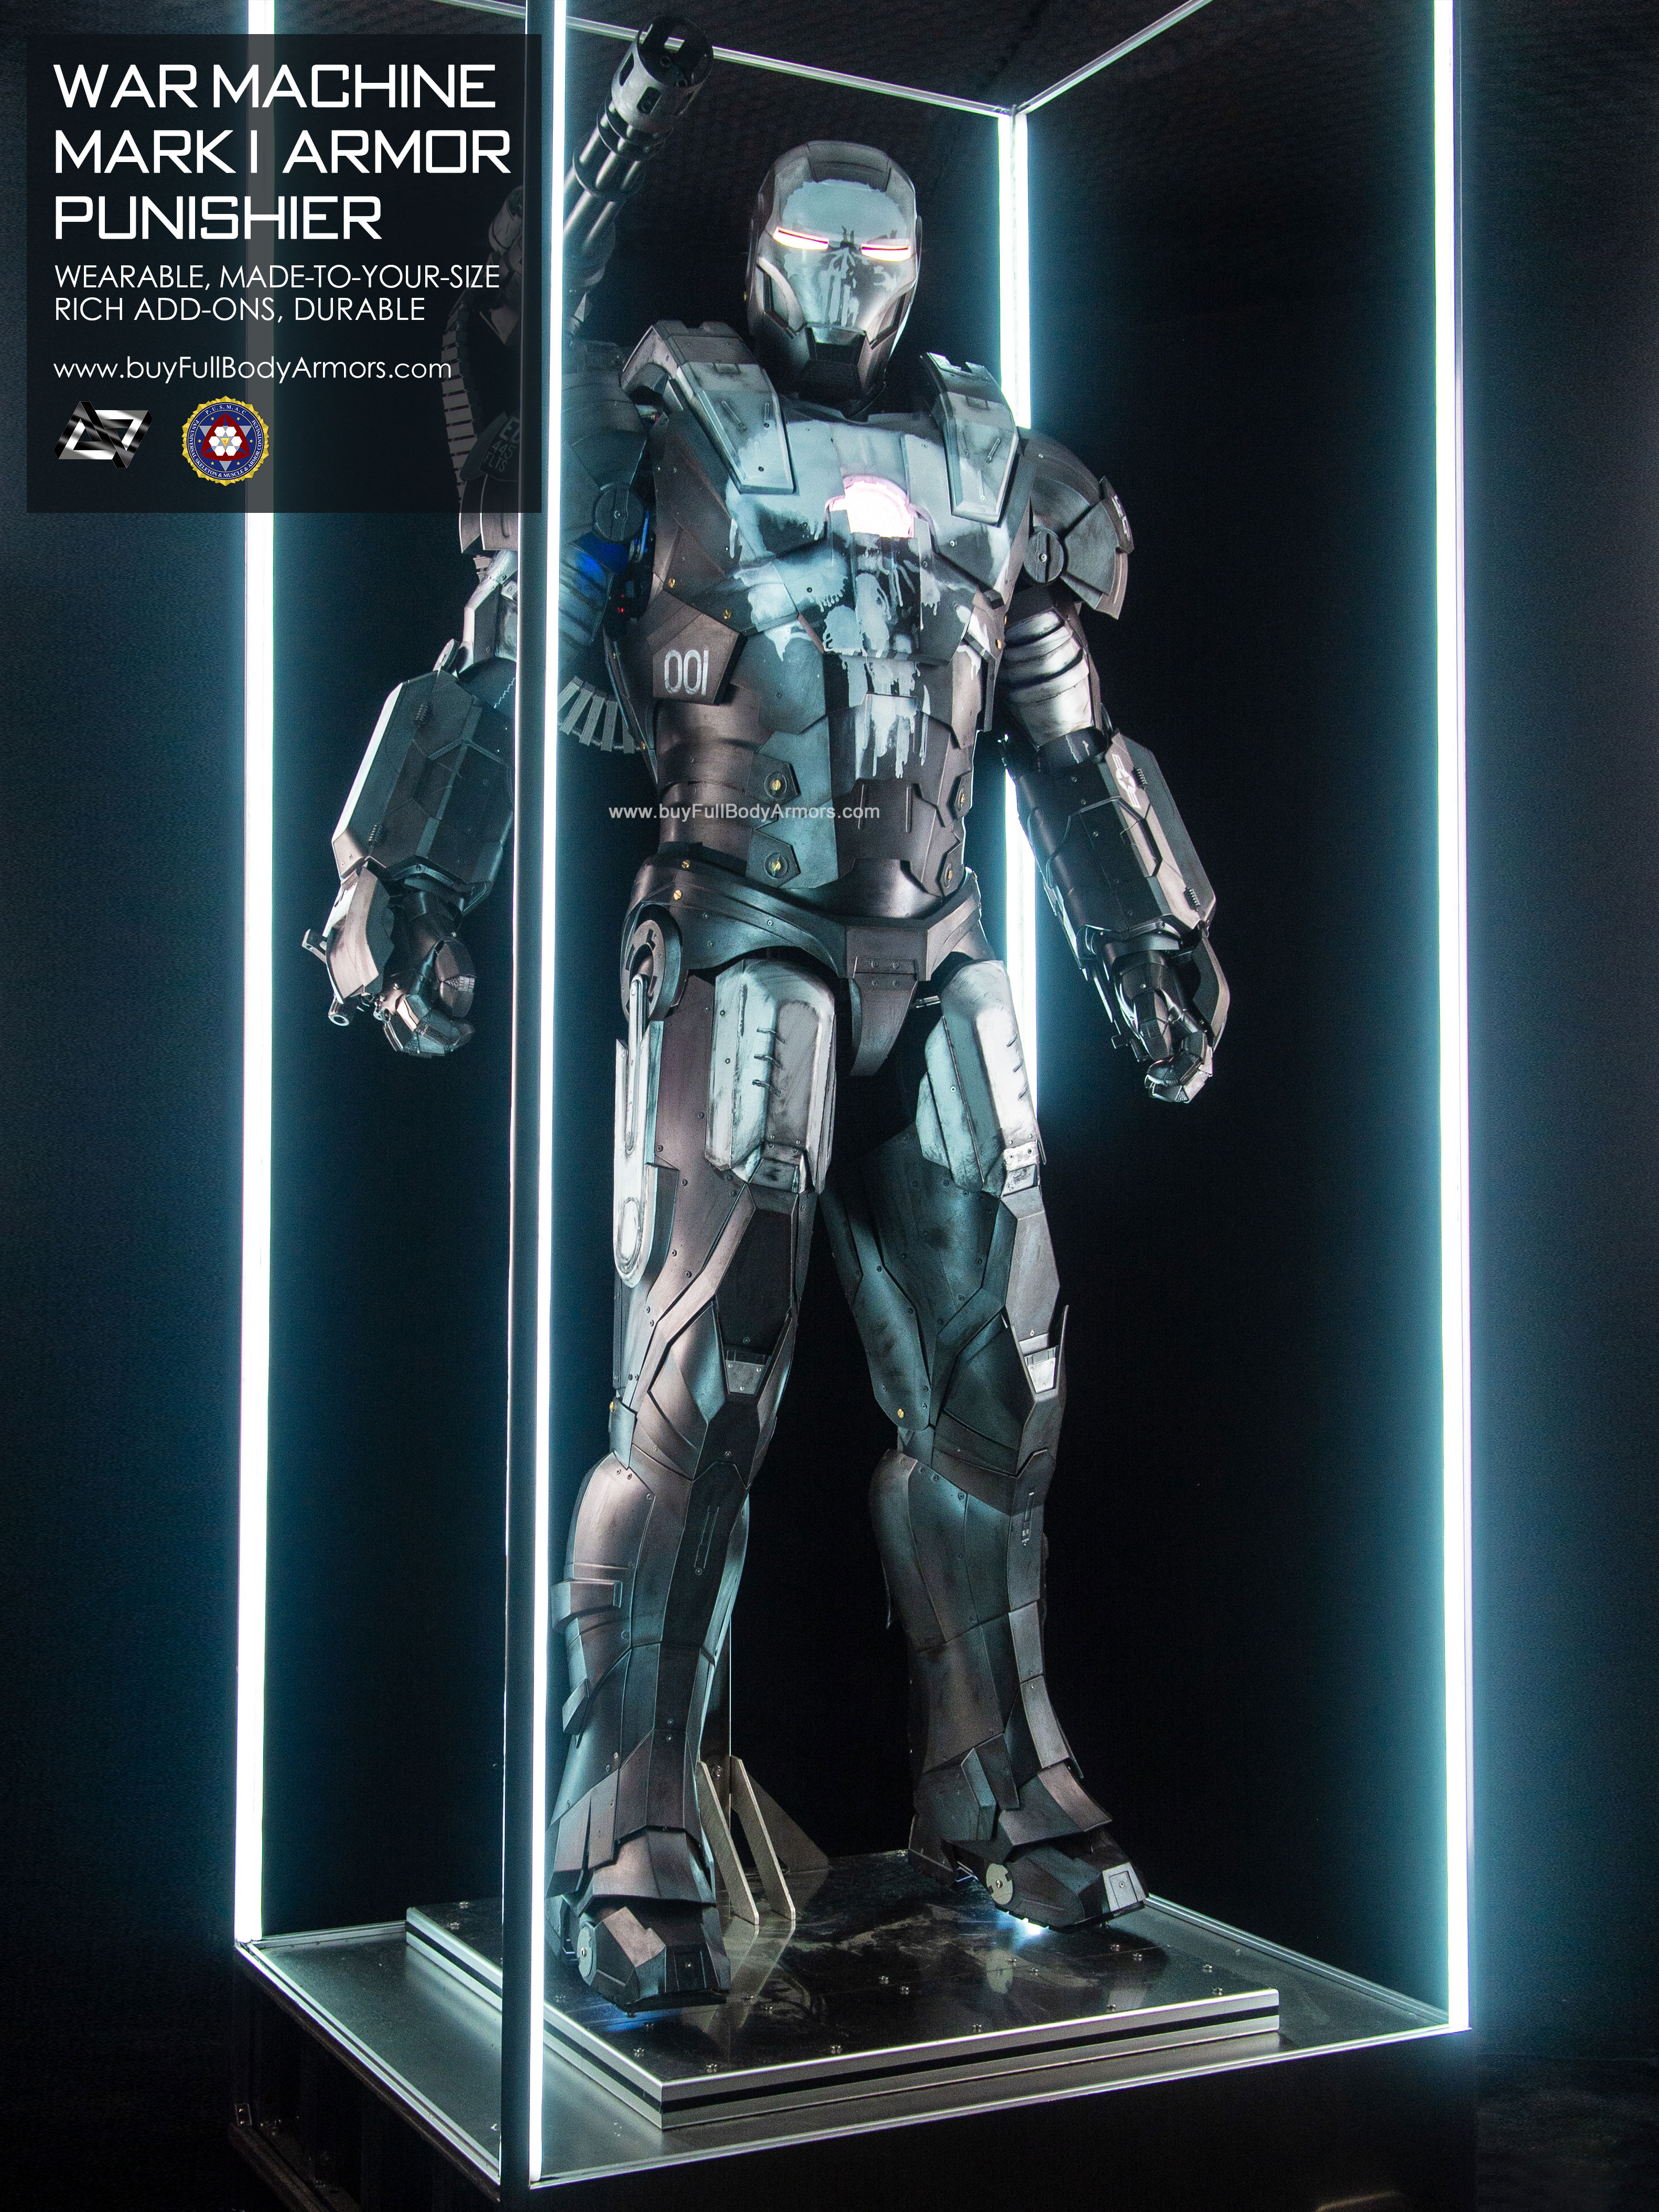 Wearable iron man suit War Machine Mark I Armor Suit punisher 3